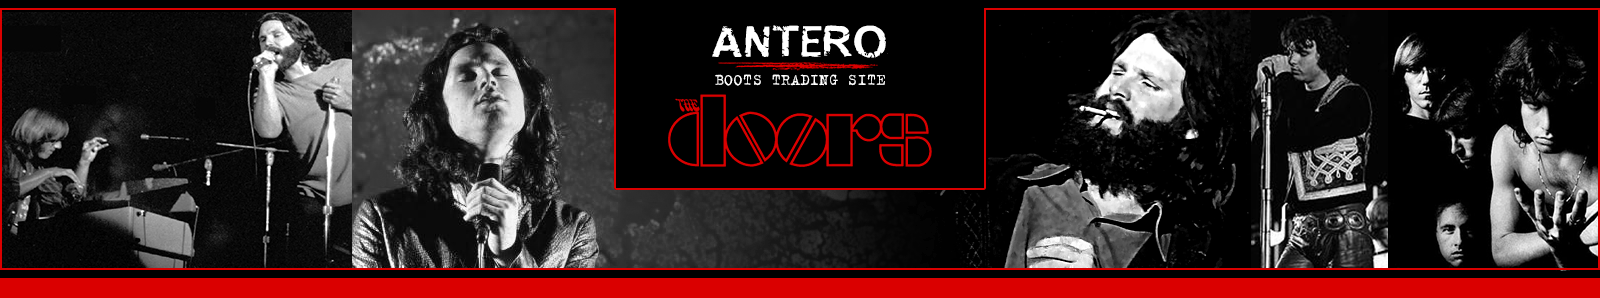 Antero Boots Trading Site